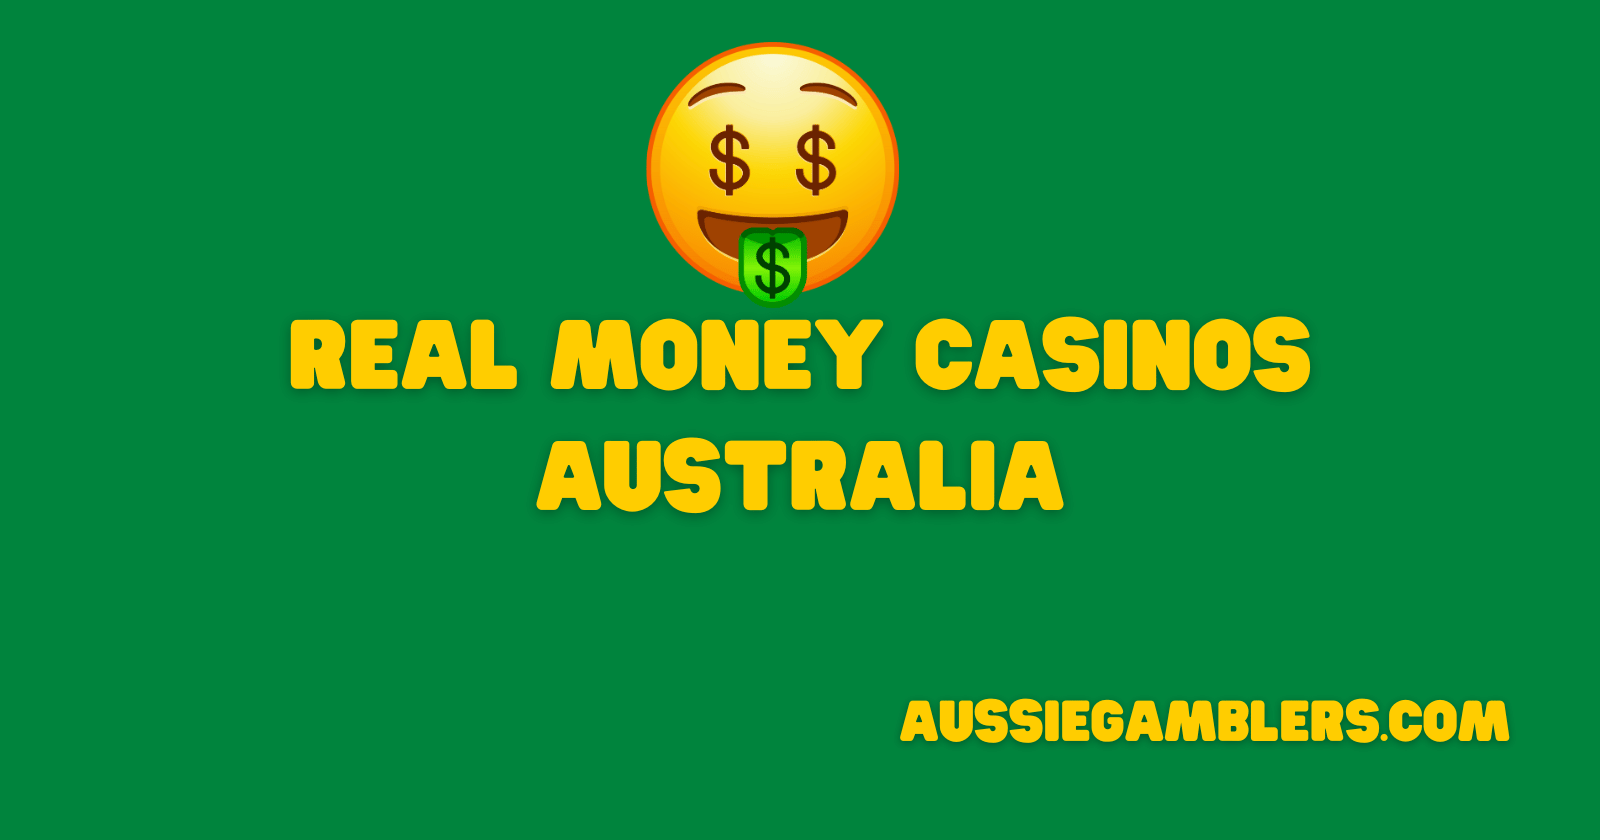 Real Money Casinos